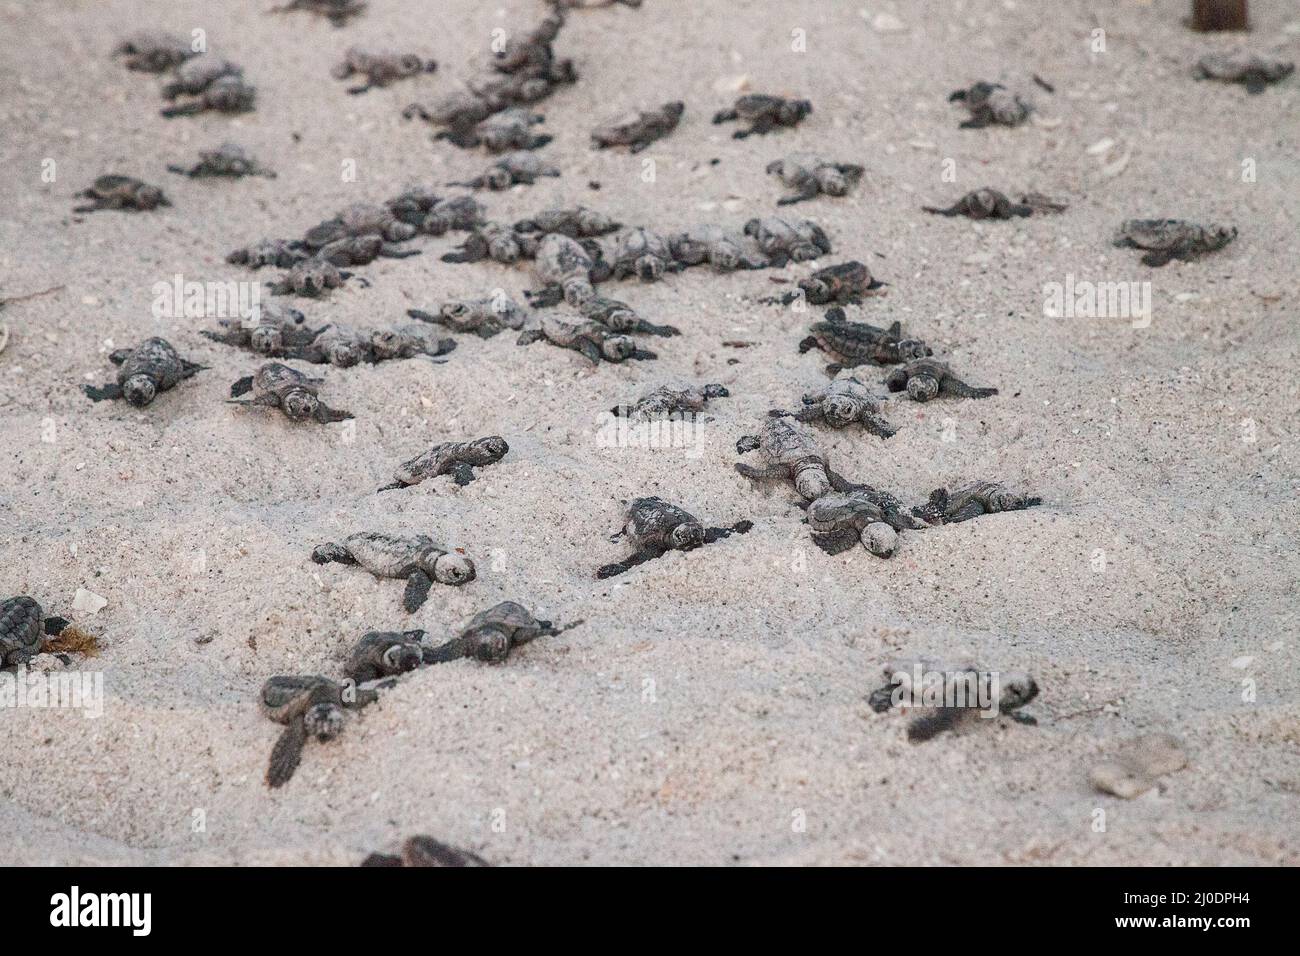 Les tortues caretta caretta naissent de leur nid Banque D'Images